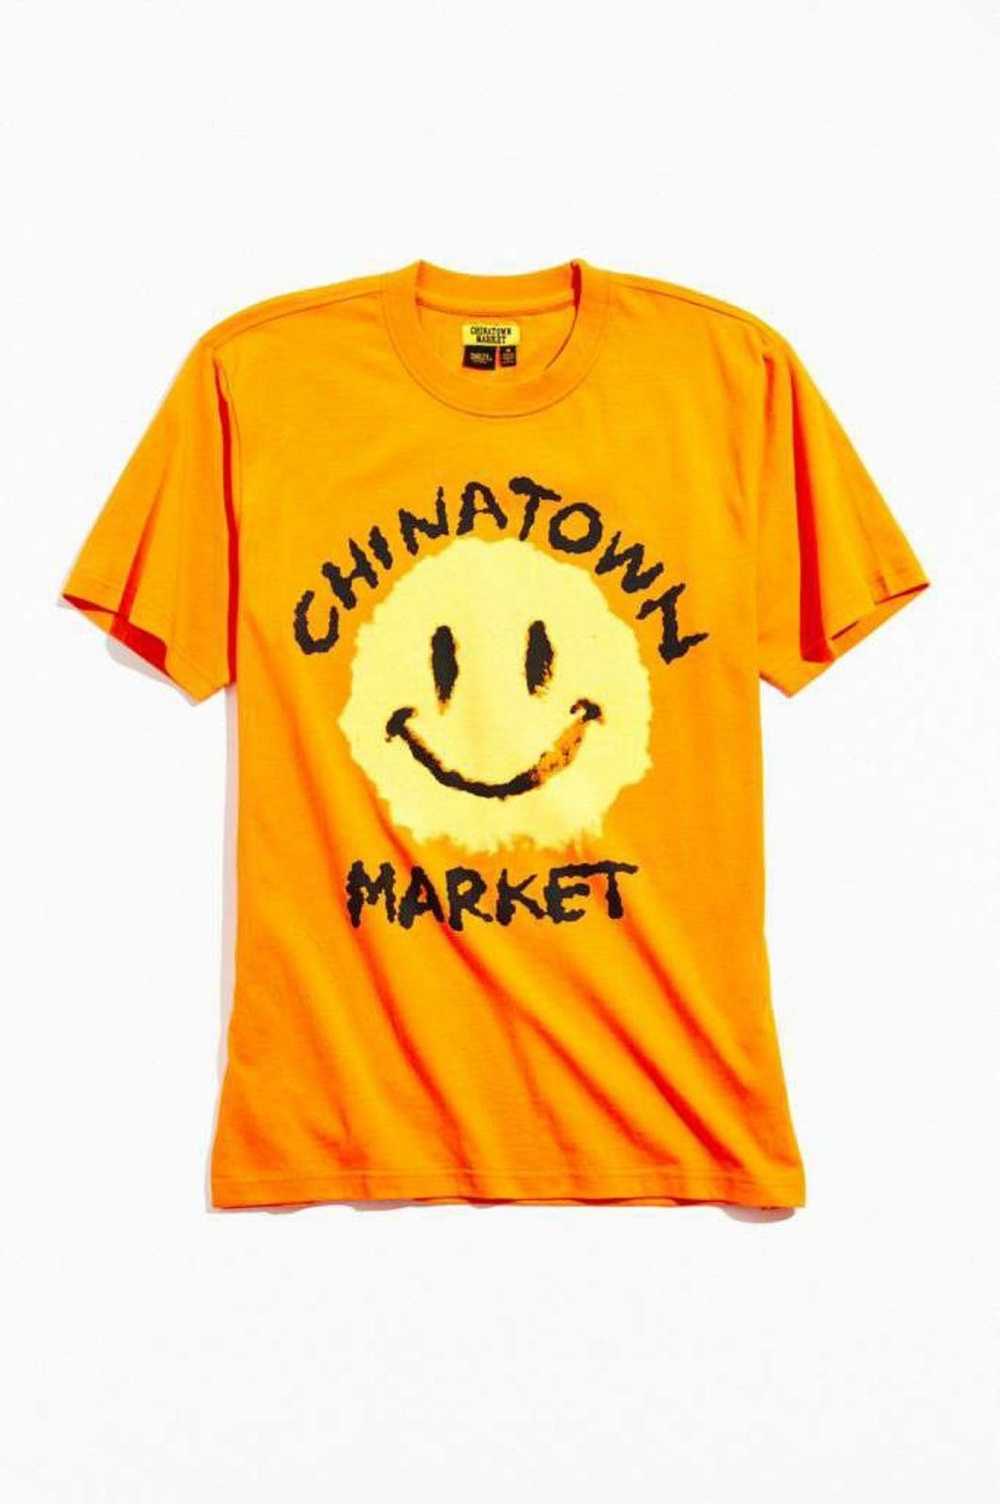 Market Chinatown market smiley tee - image 1